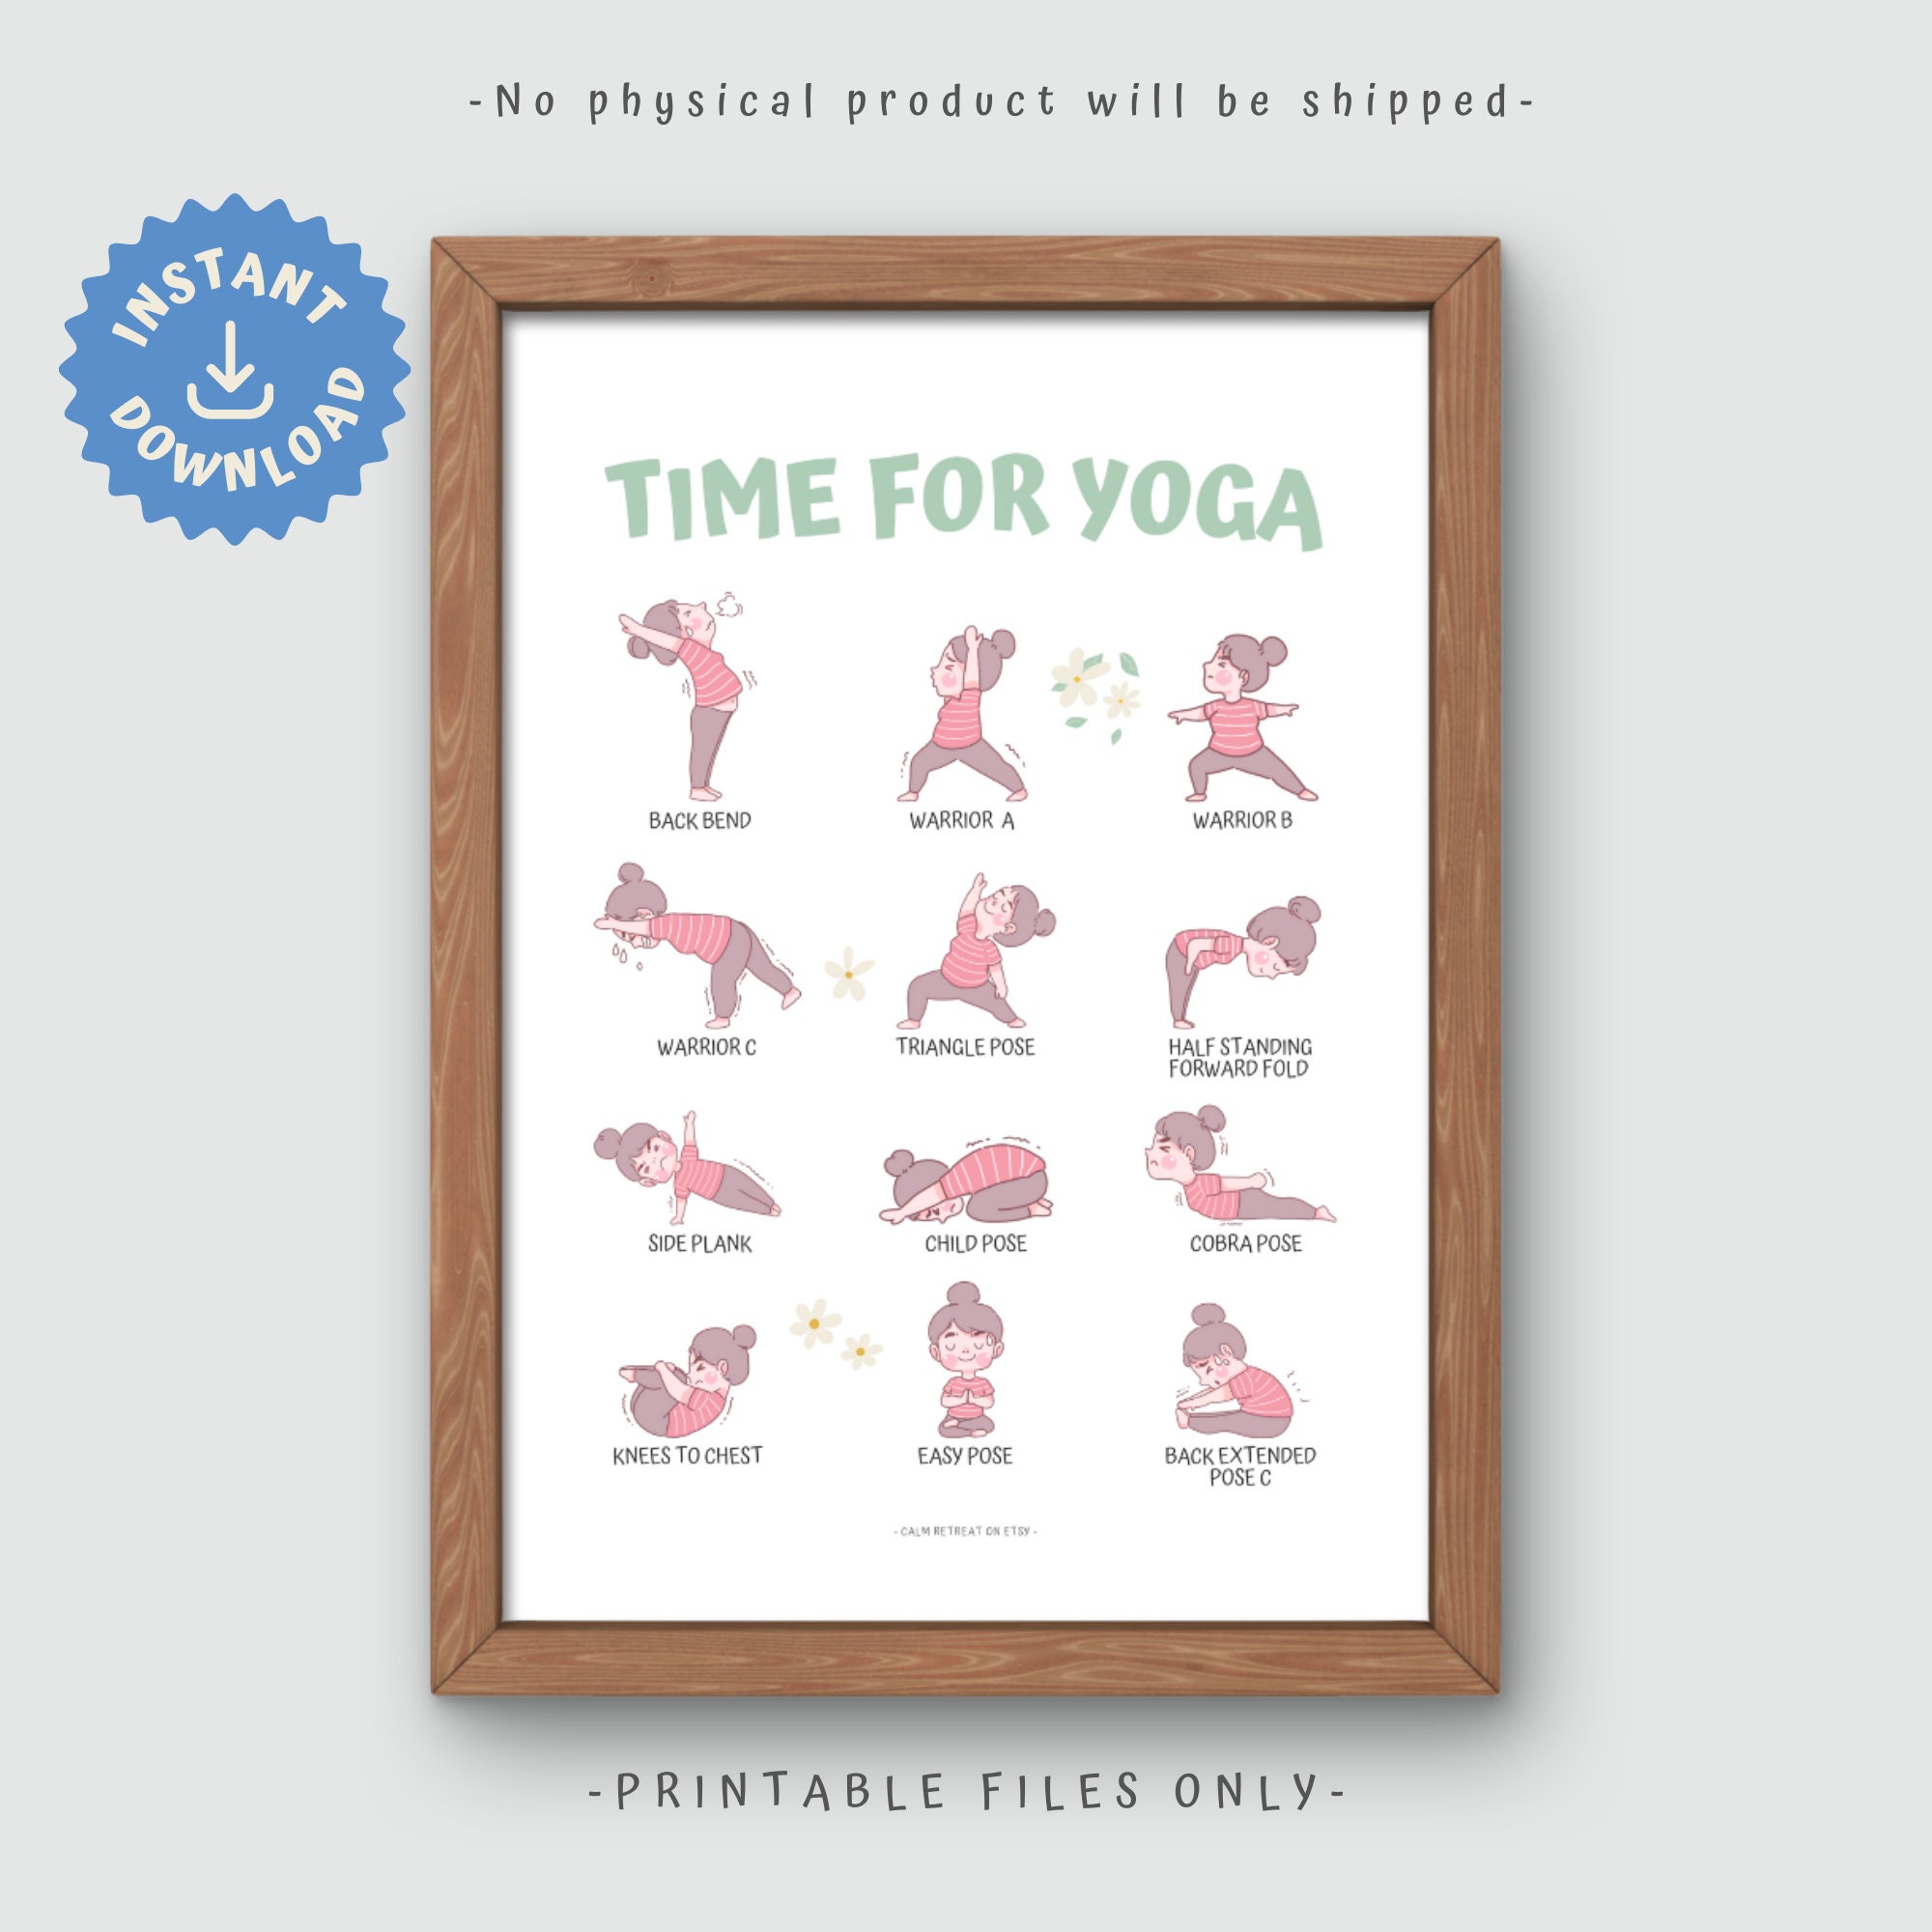 Morning Yoga Routine Printable,morning Yoga Poses, 30 Yoga Poses Poster,  Yoga Poses Wall Art, Yoga Studio Decor,yoga Poses Illustrations Pdf 